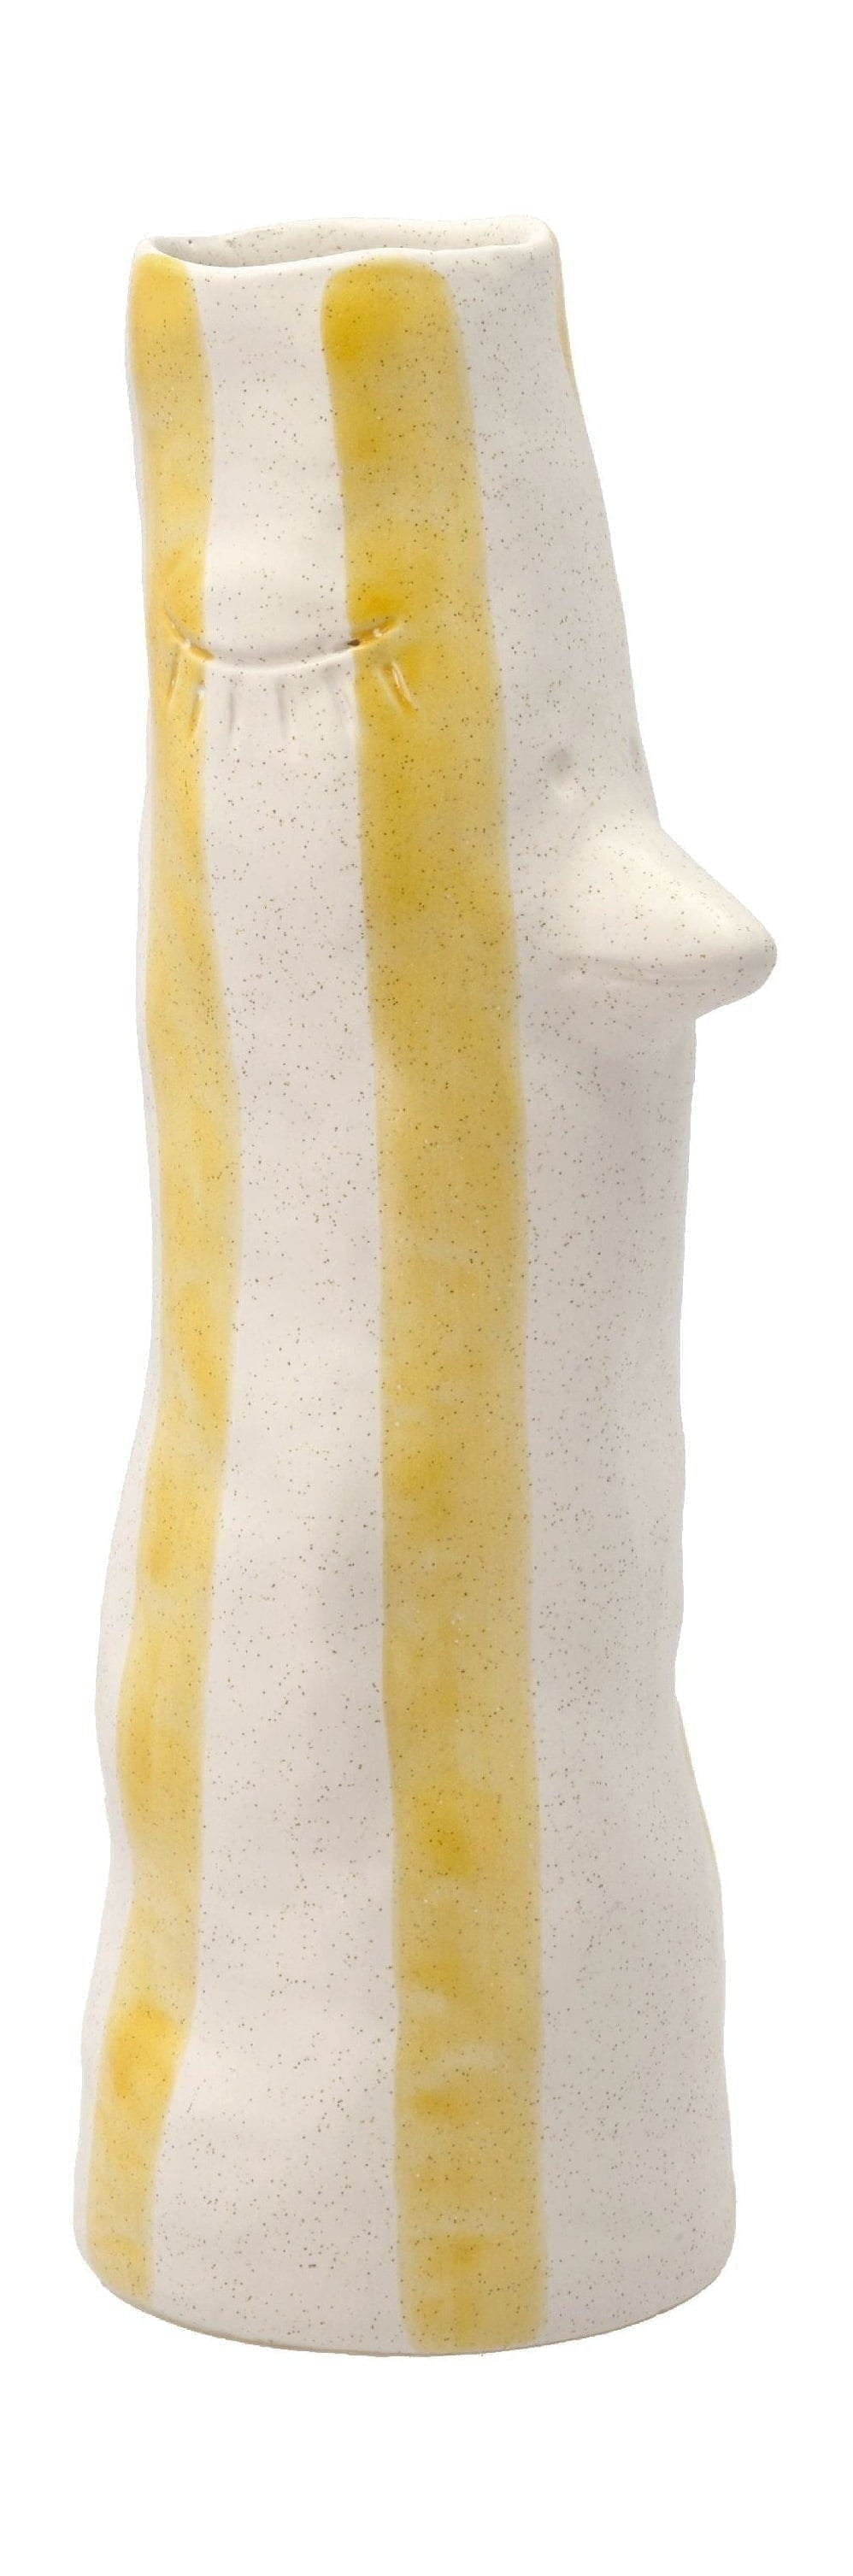 Villa Collection Styles Vase With Beak And Eyelashes Large, Yellow